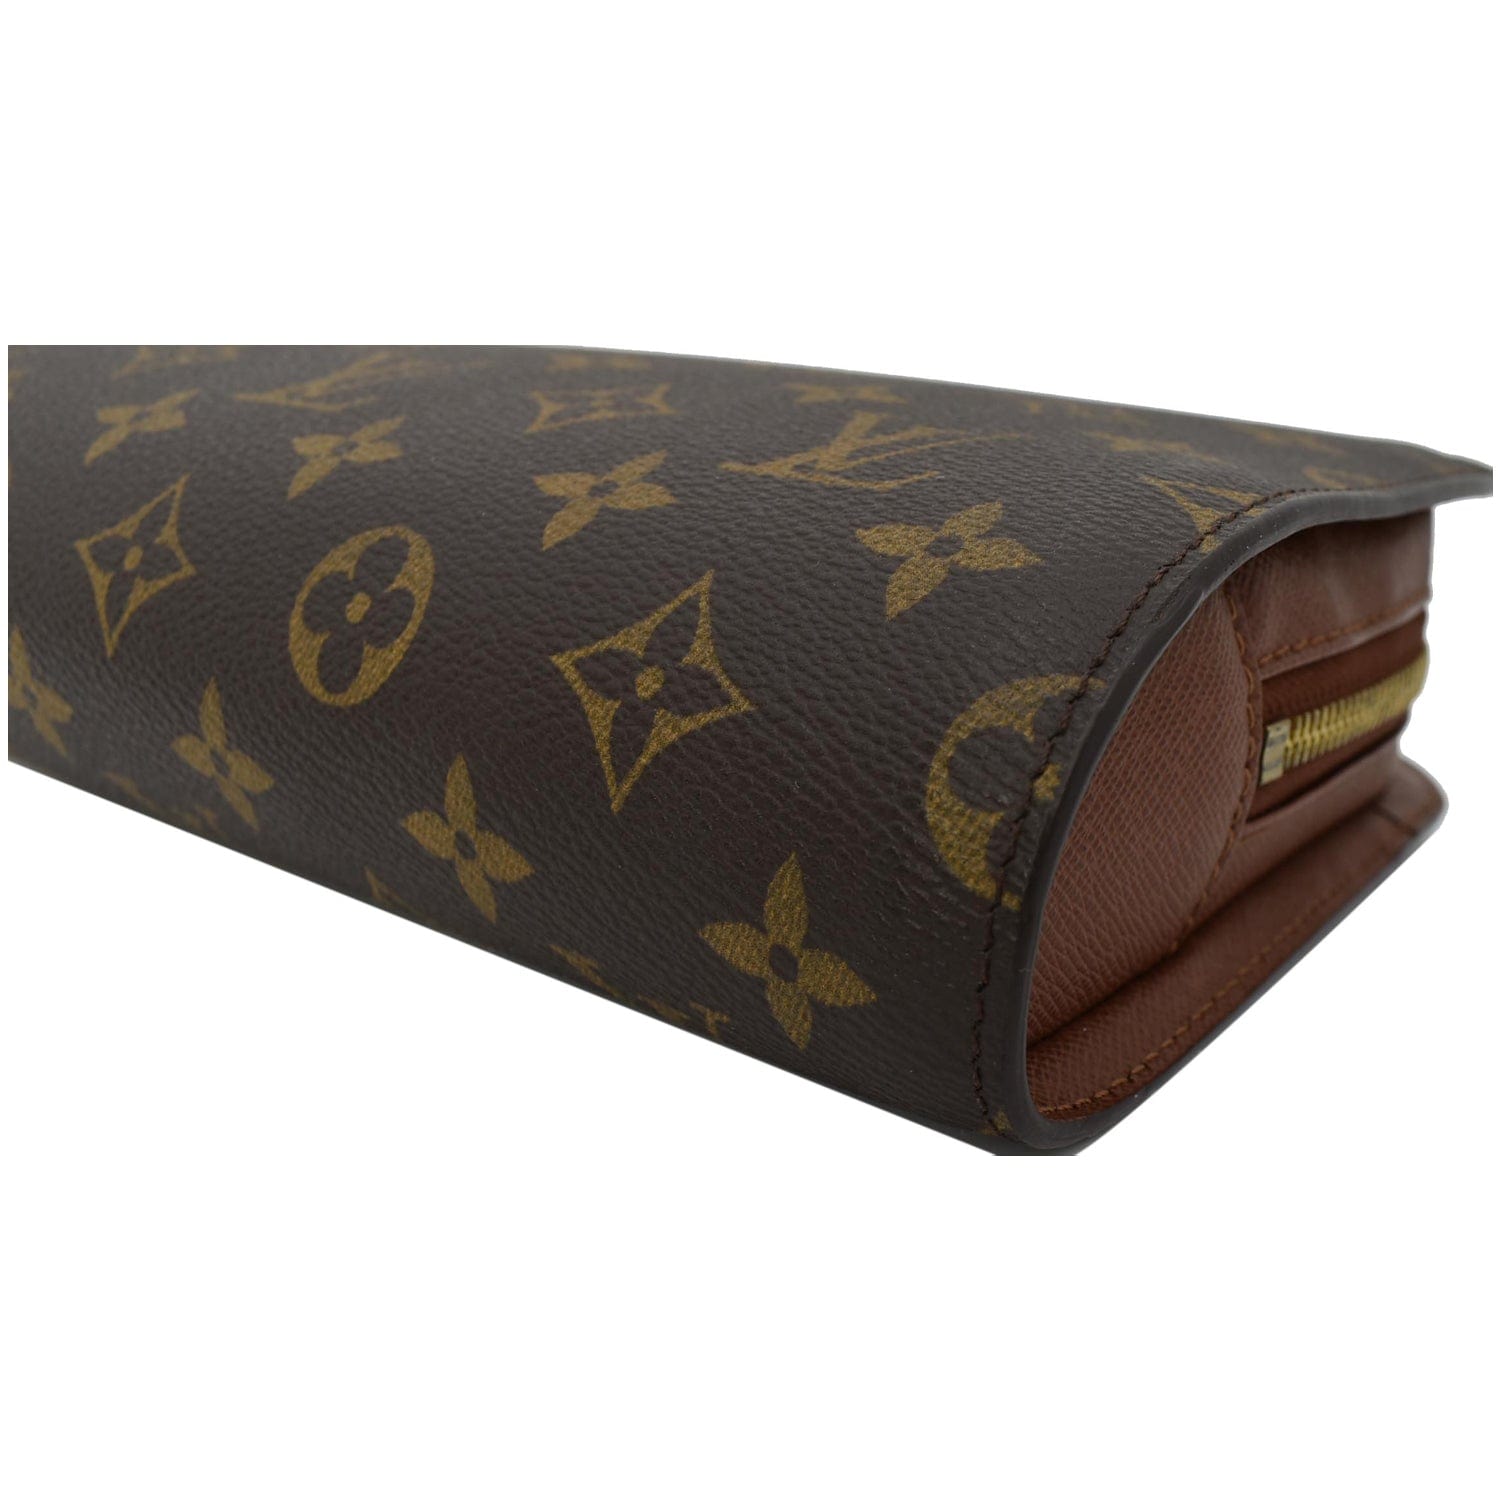 Orsay Clutch Monogram – Keeks Designer Handbags